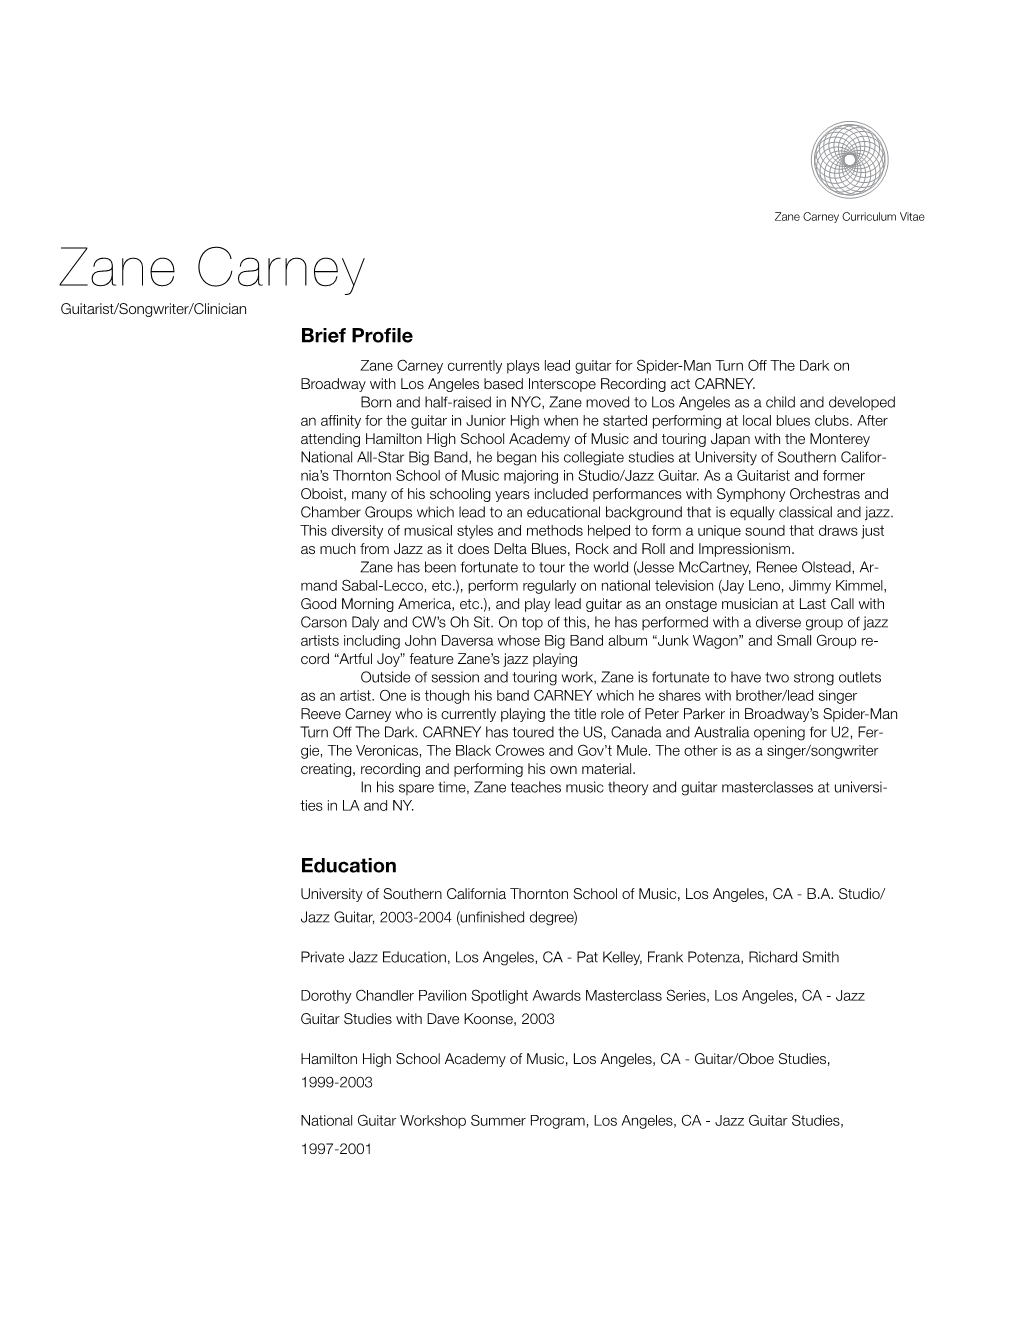 Zane Carney Curriculum Vitae REAL 2012